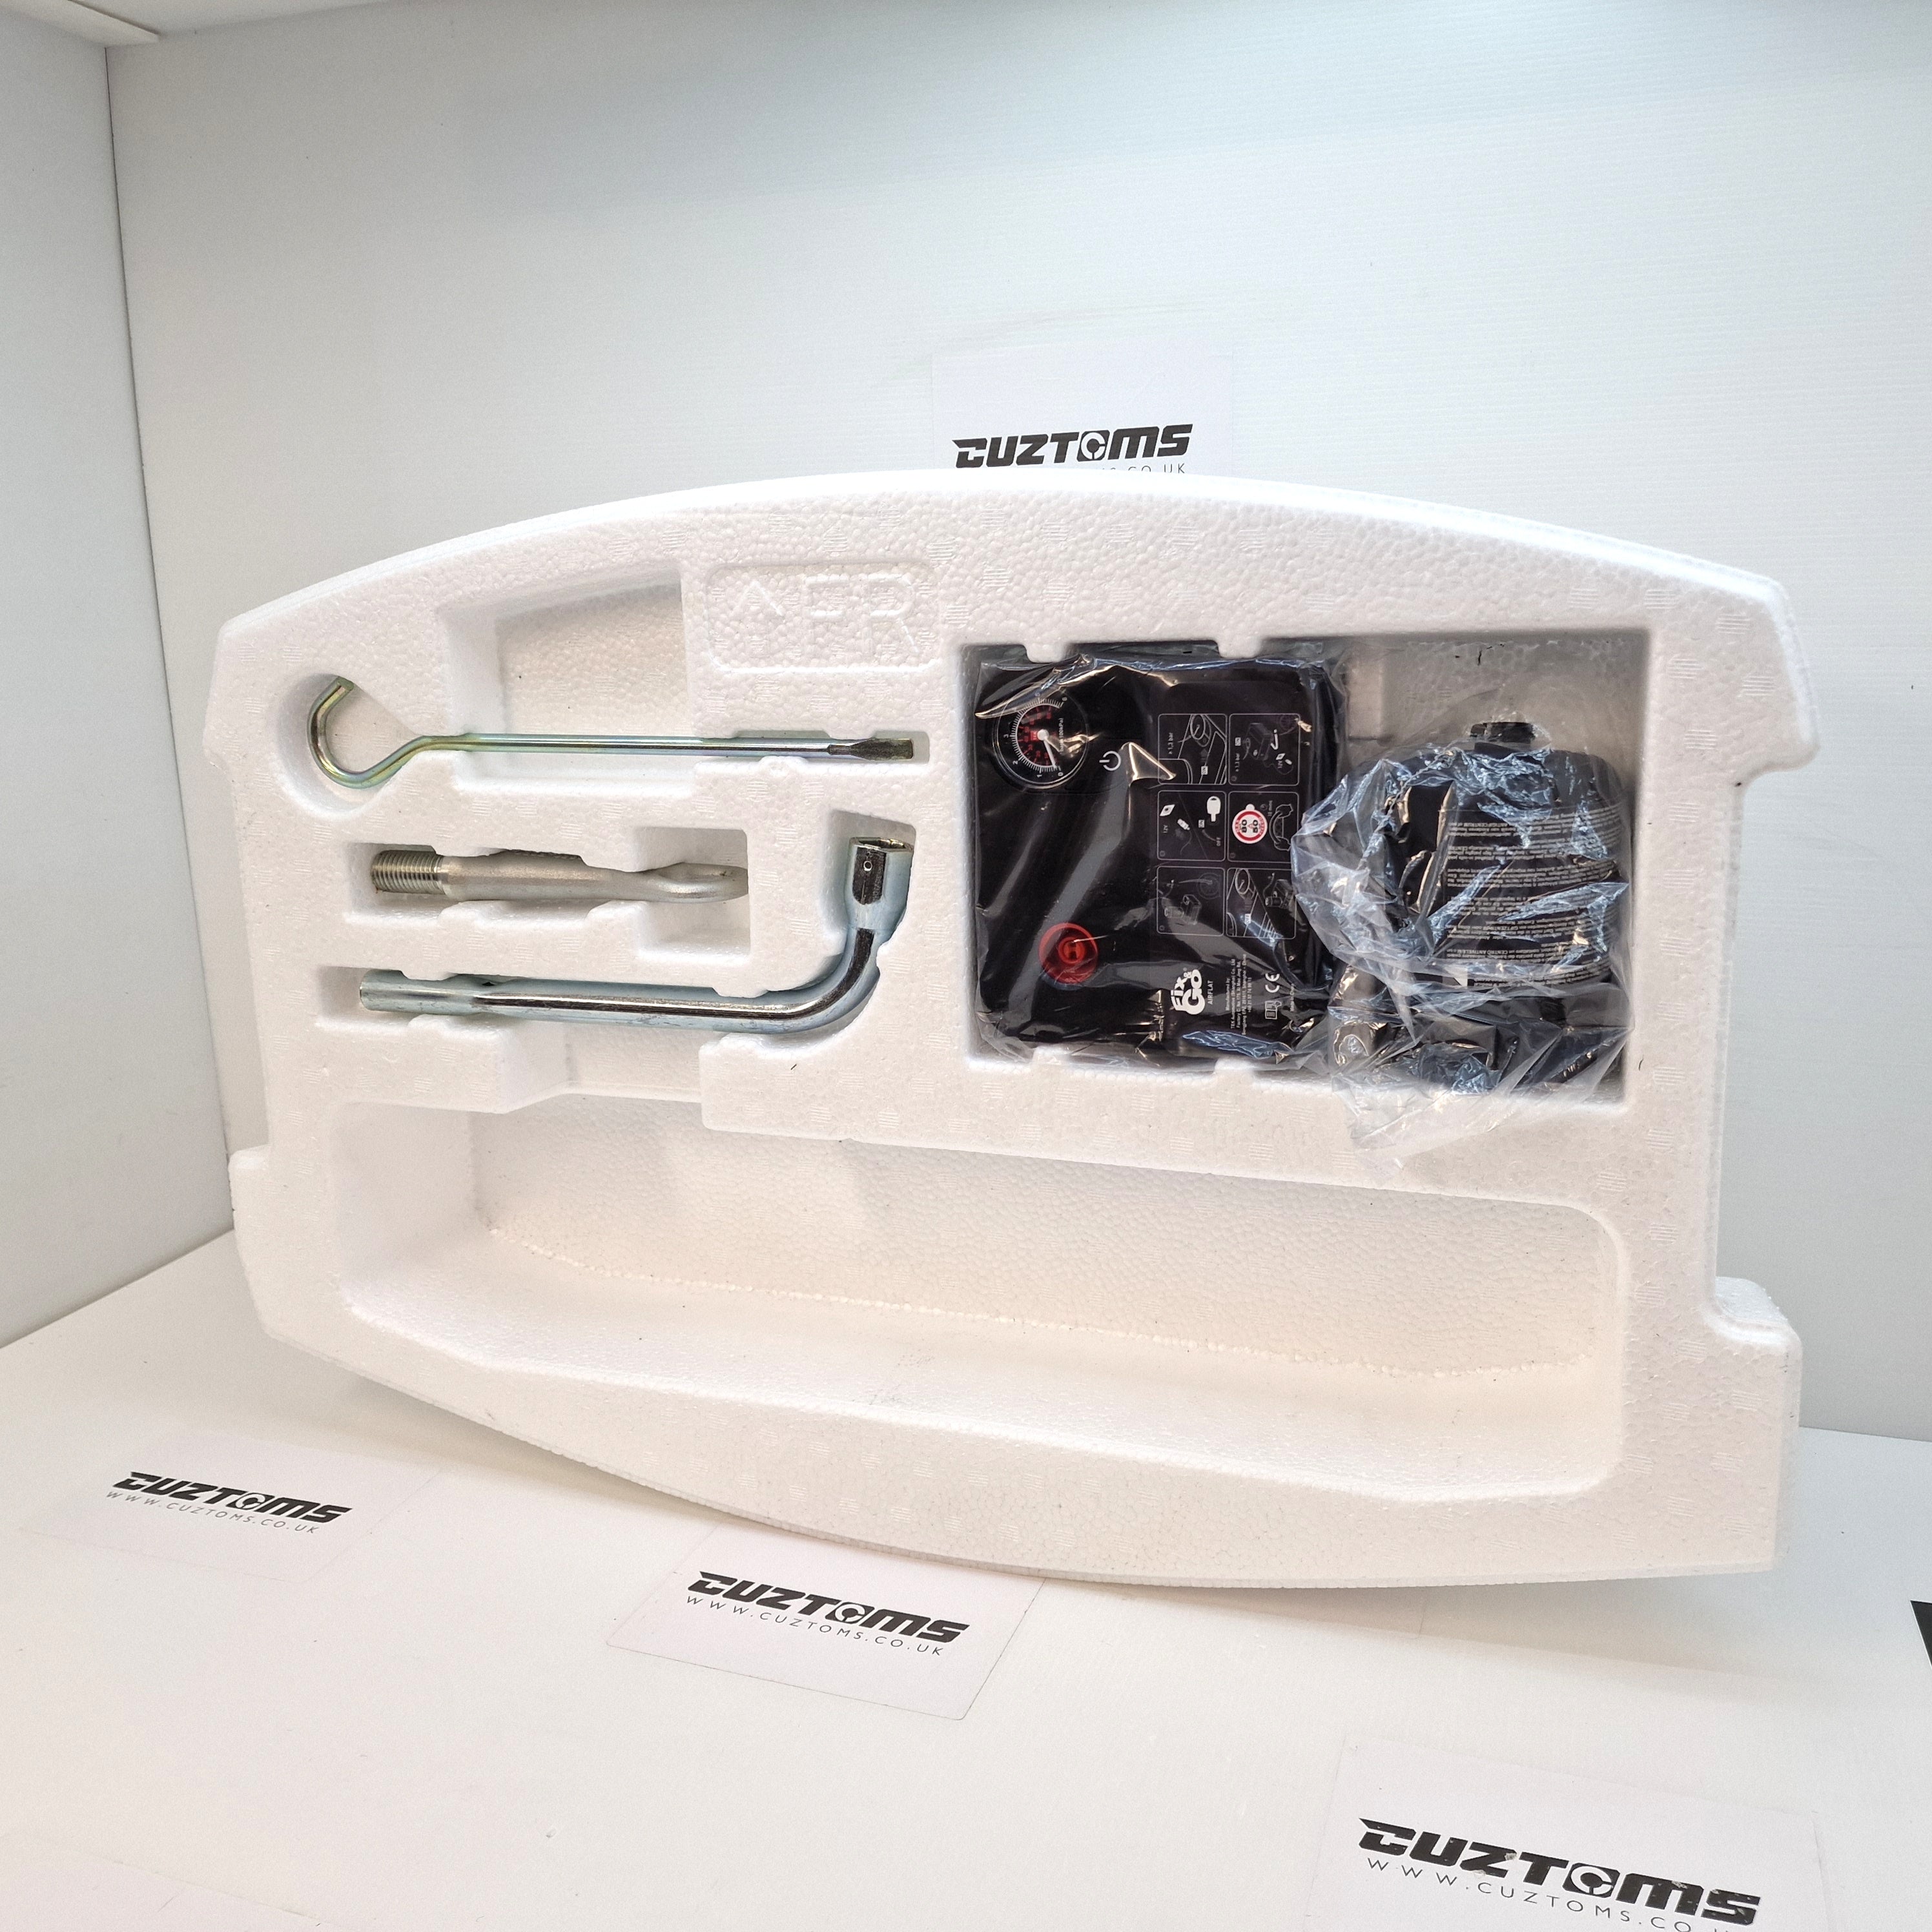 Suzuki Swift Foam Insert With Jacking Tools and Tyre Repair Kit